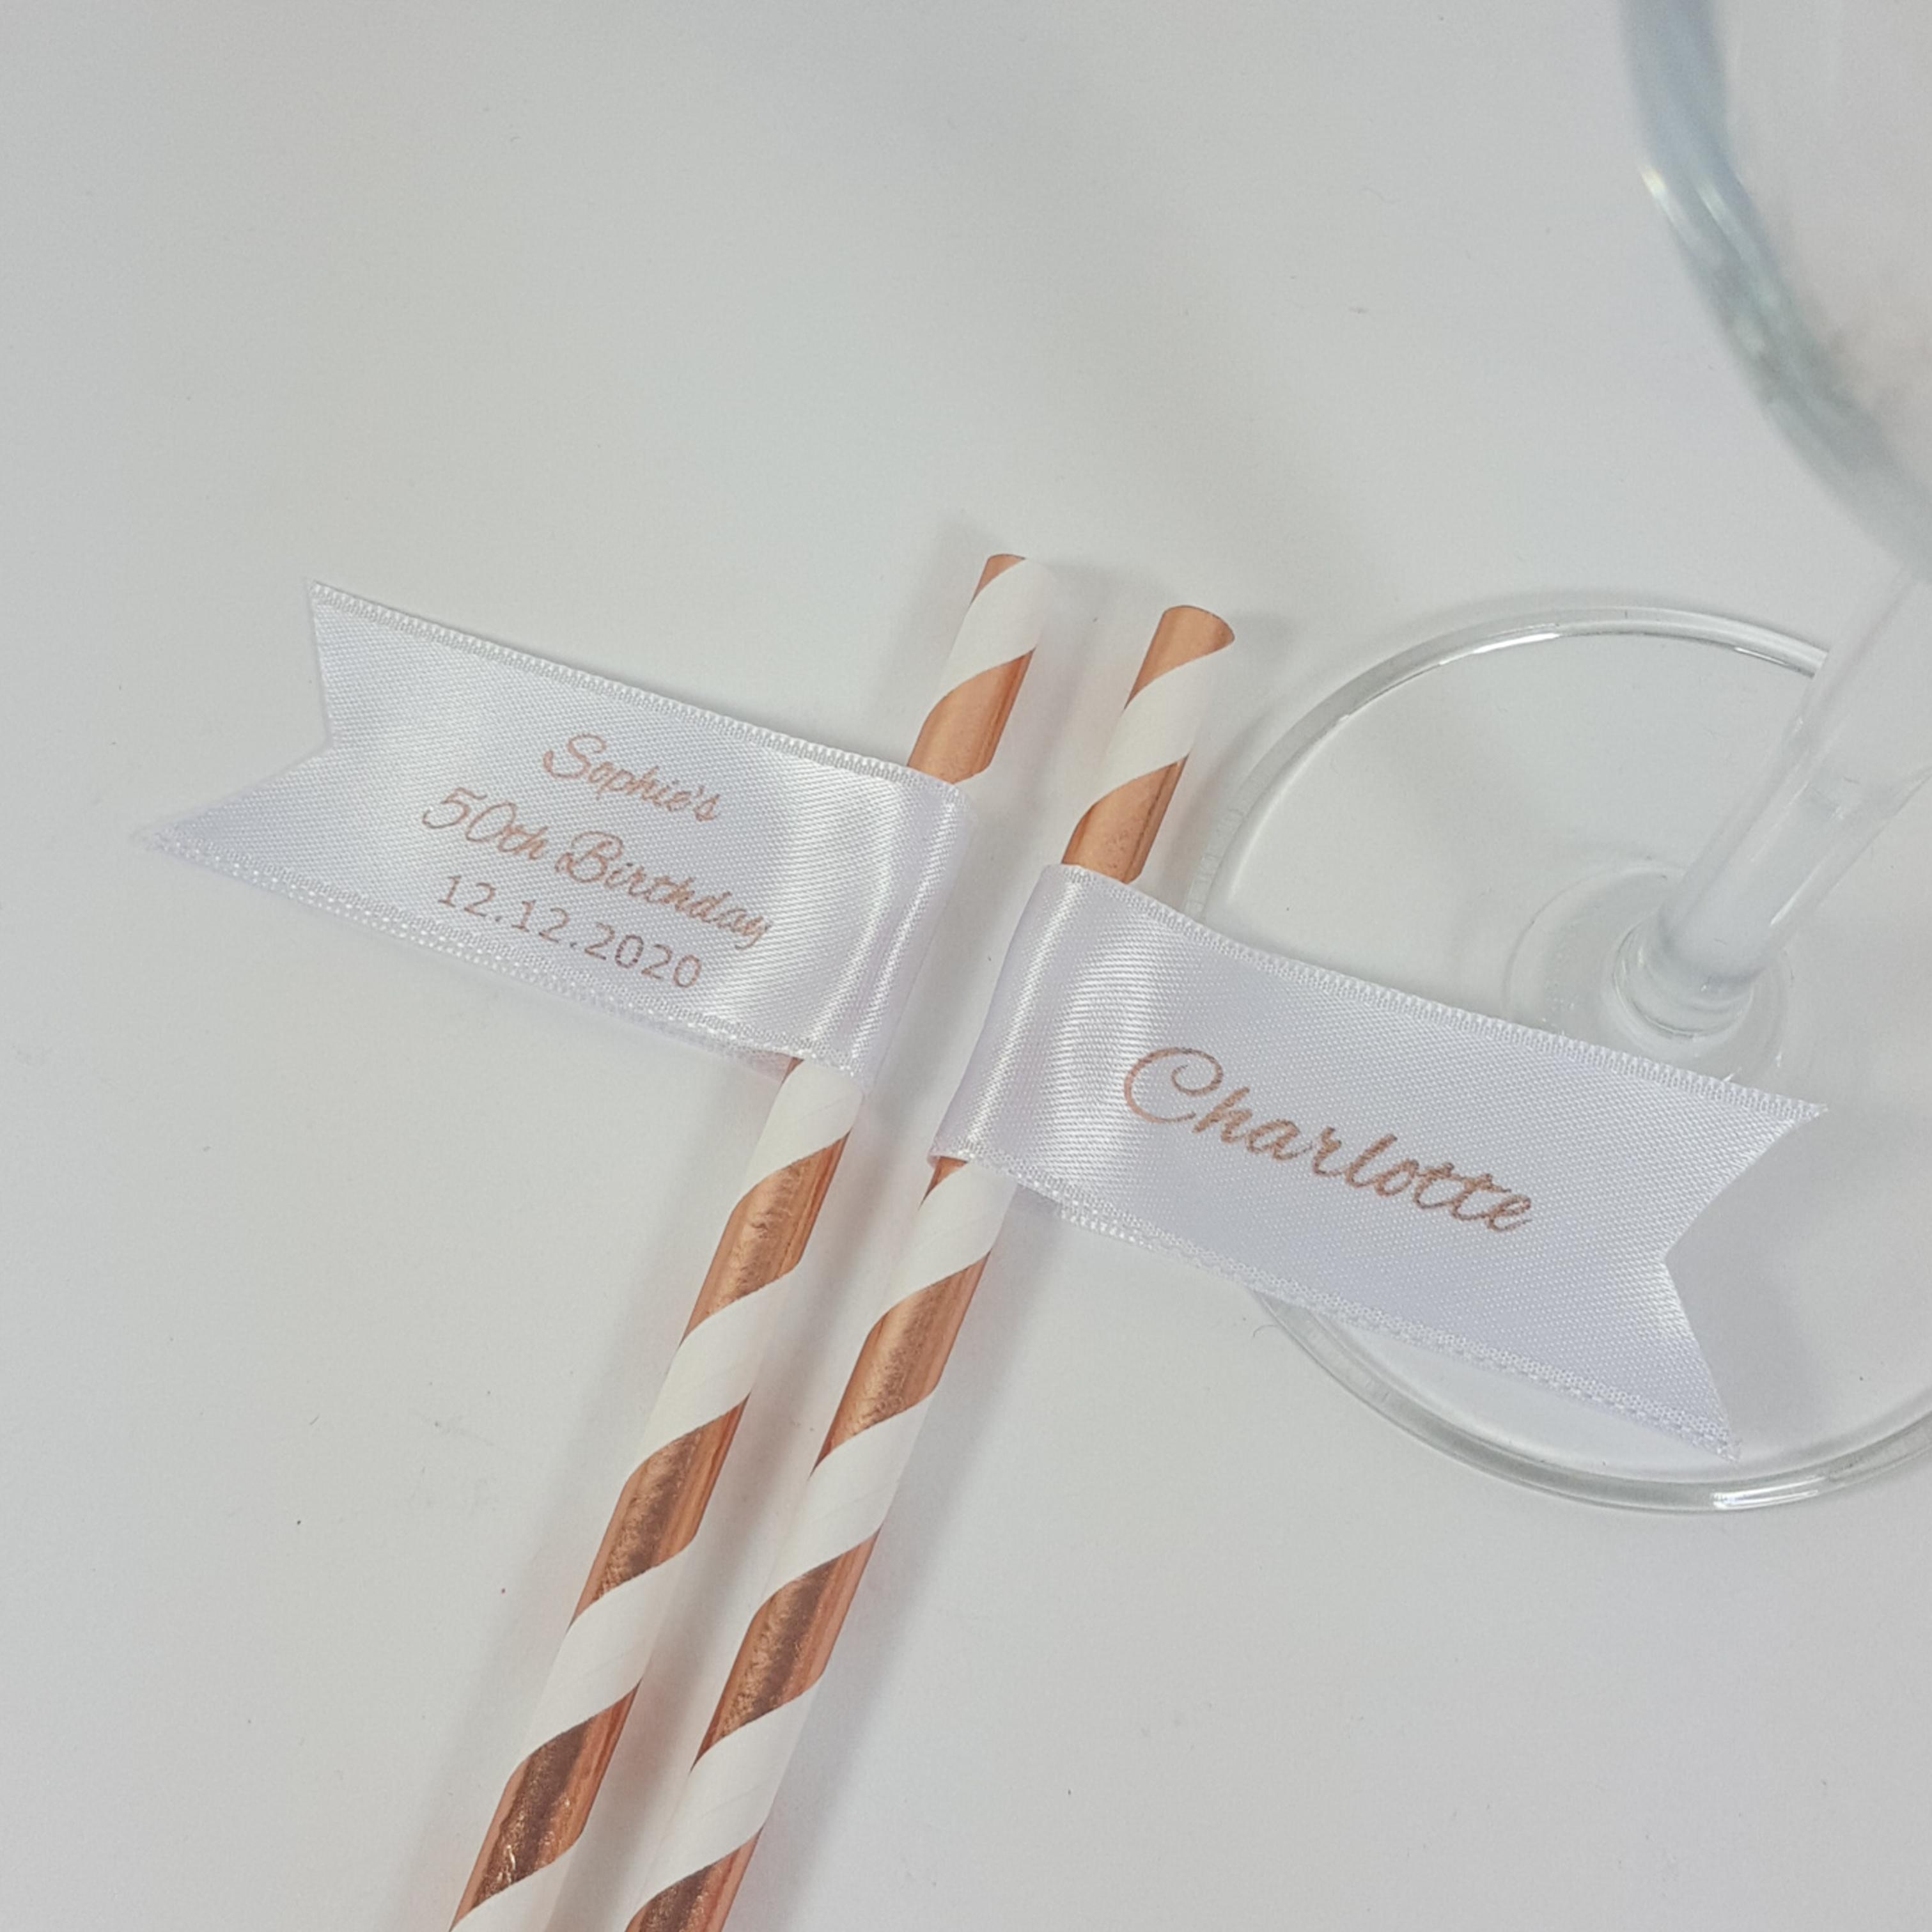 Personalised name straws rose gold